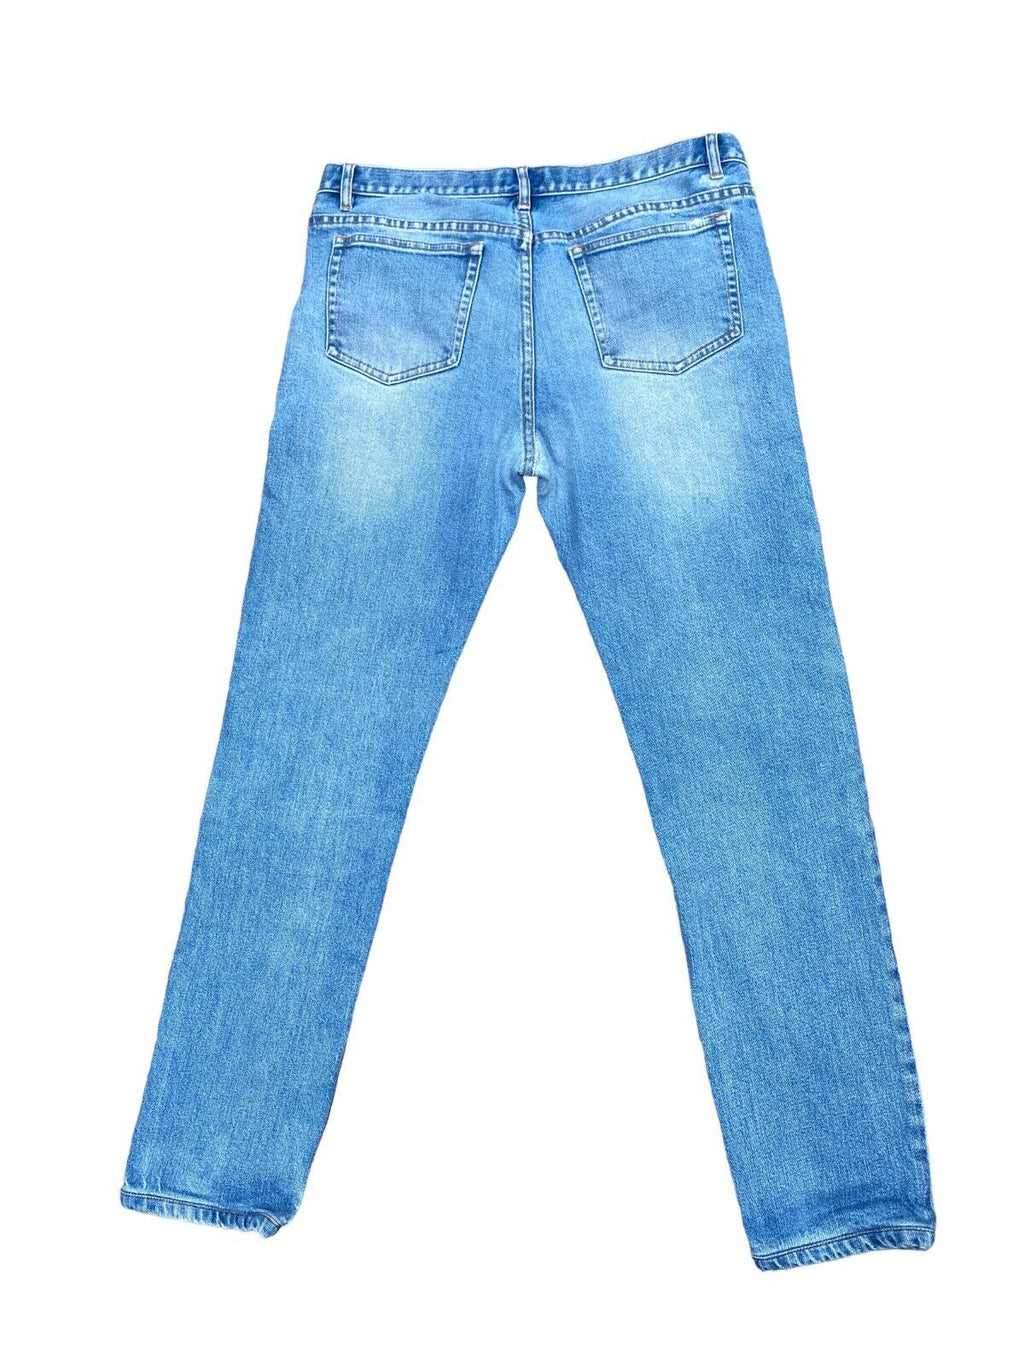 Butler Denim Jeans   Petit New Standard  Slim Fit   Size 33 APC